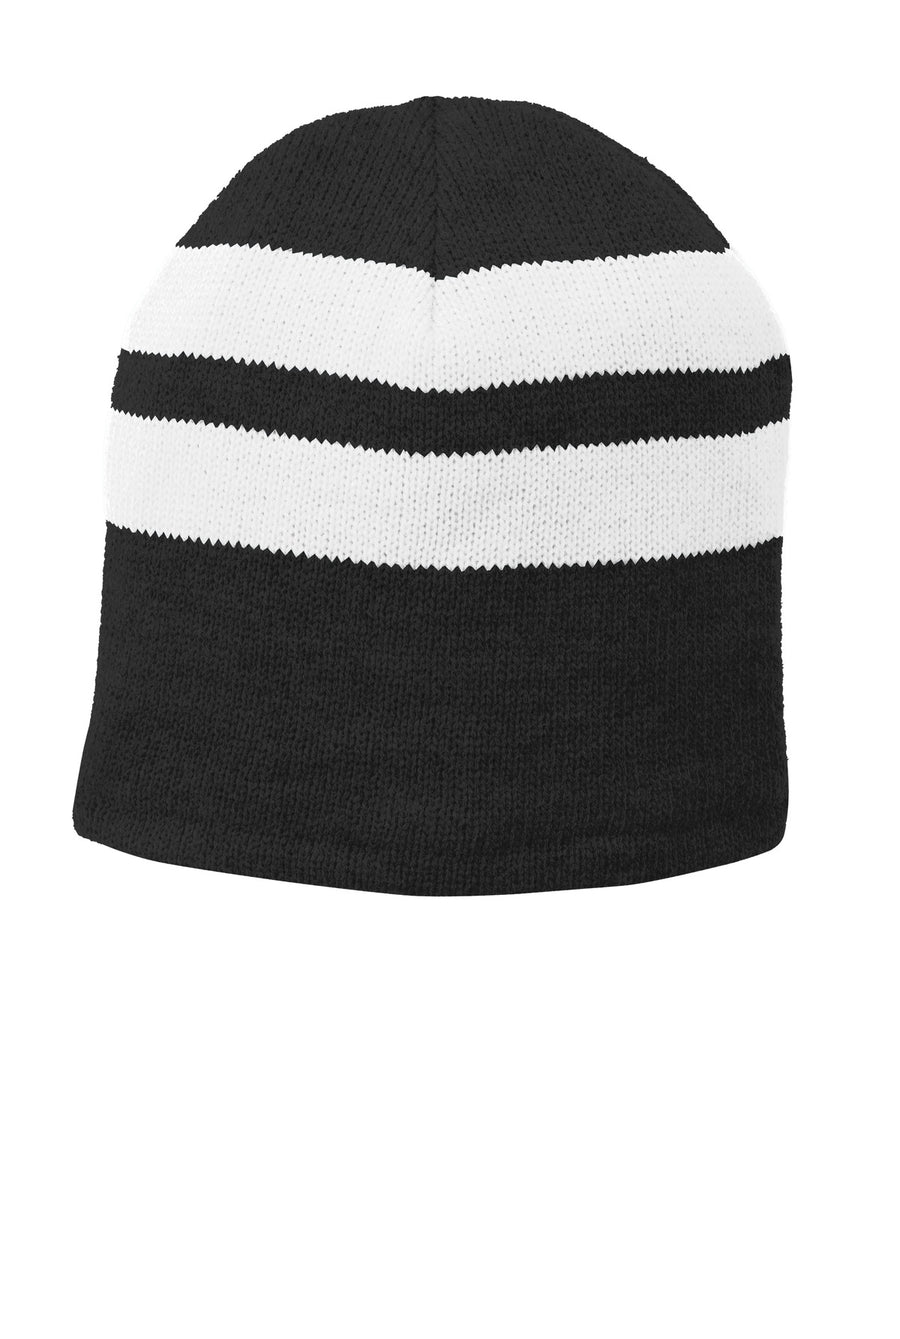 Port & Company Fleece-Lined Striped Beanie Cap.